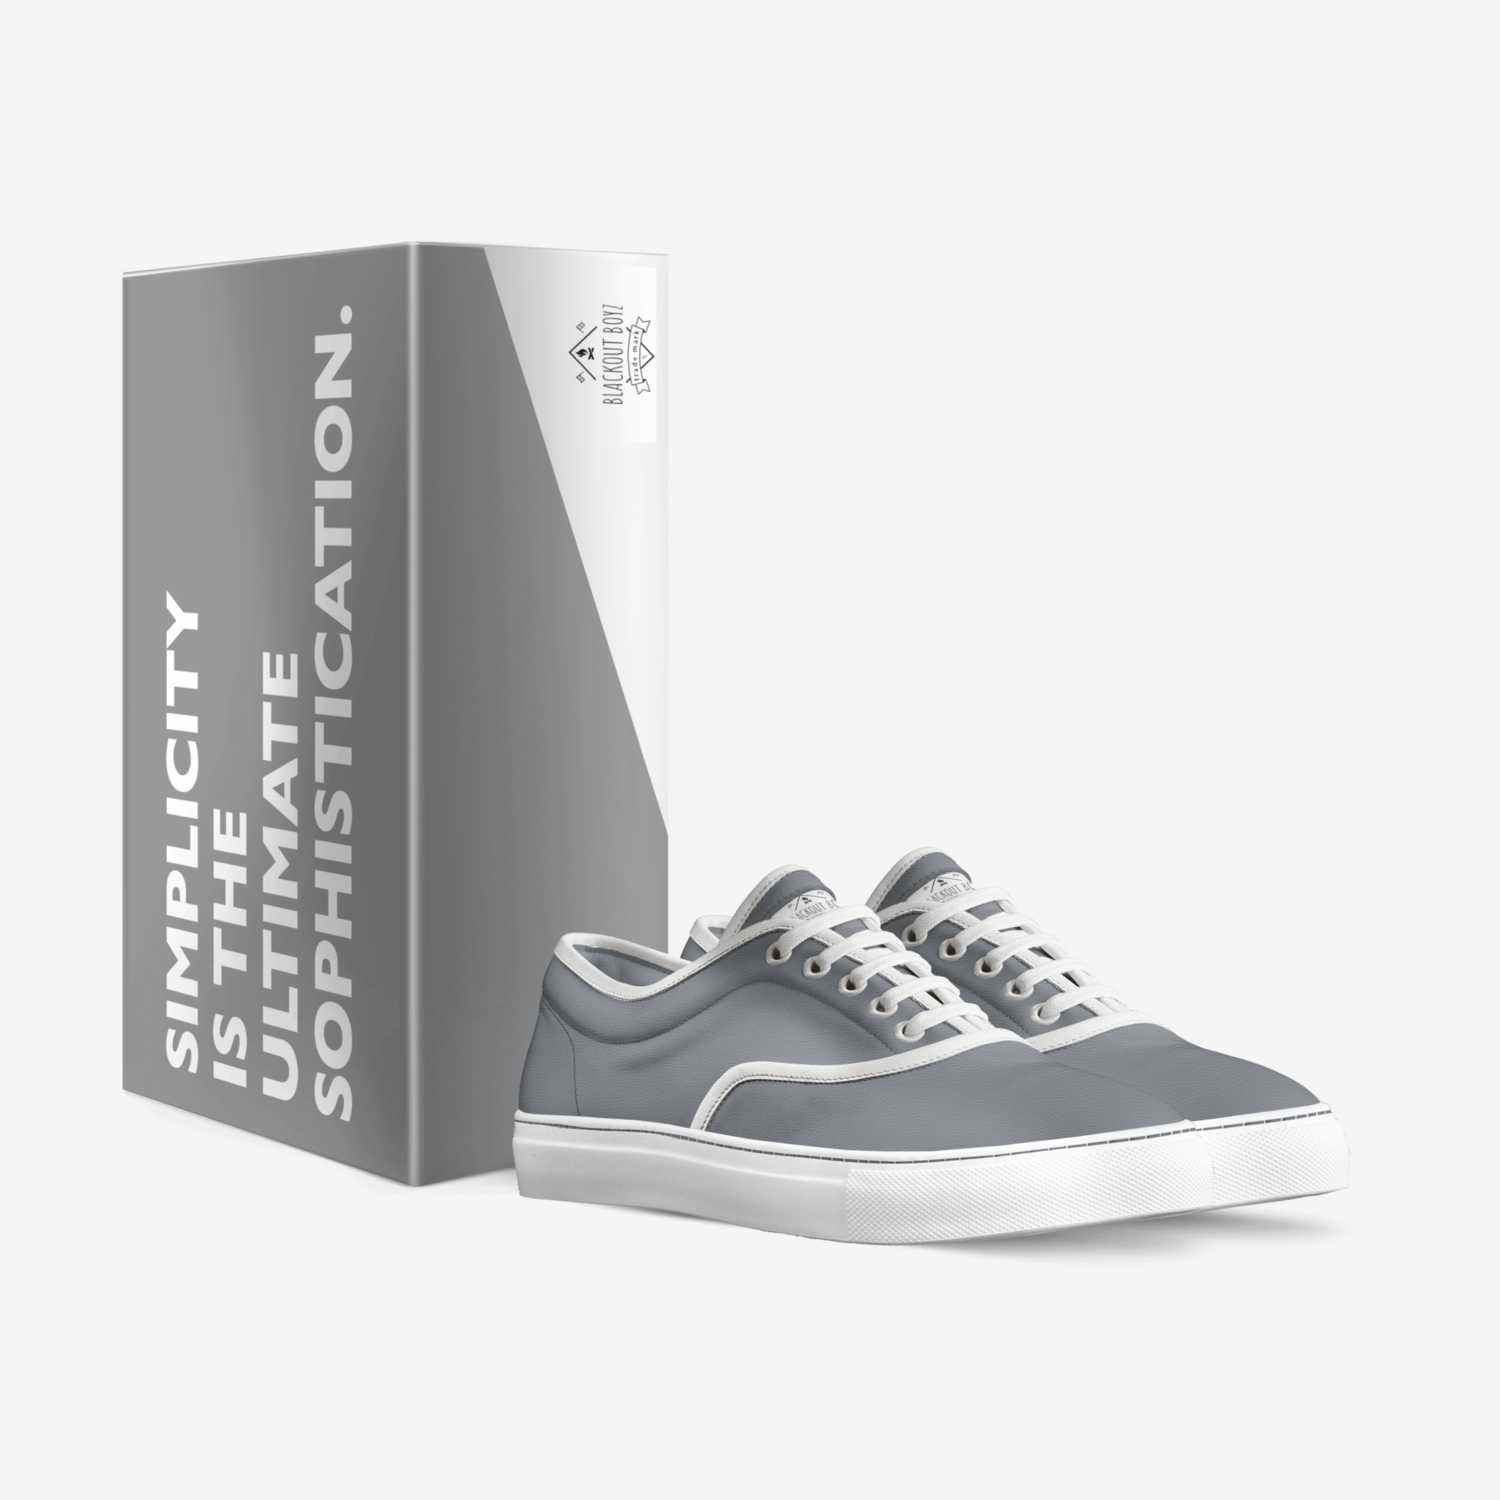 Blackout Boyz custom made in Italy shoes by Hugo Rubio | Box view